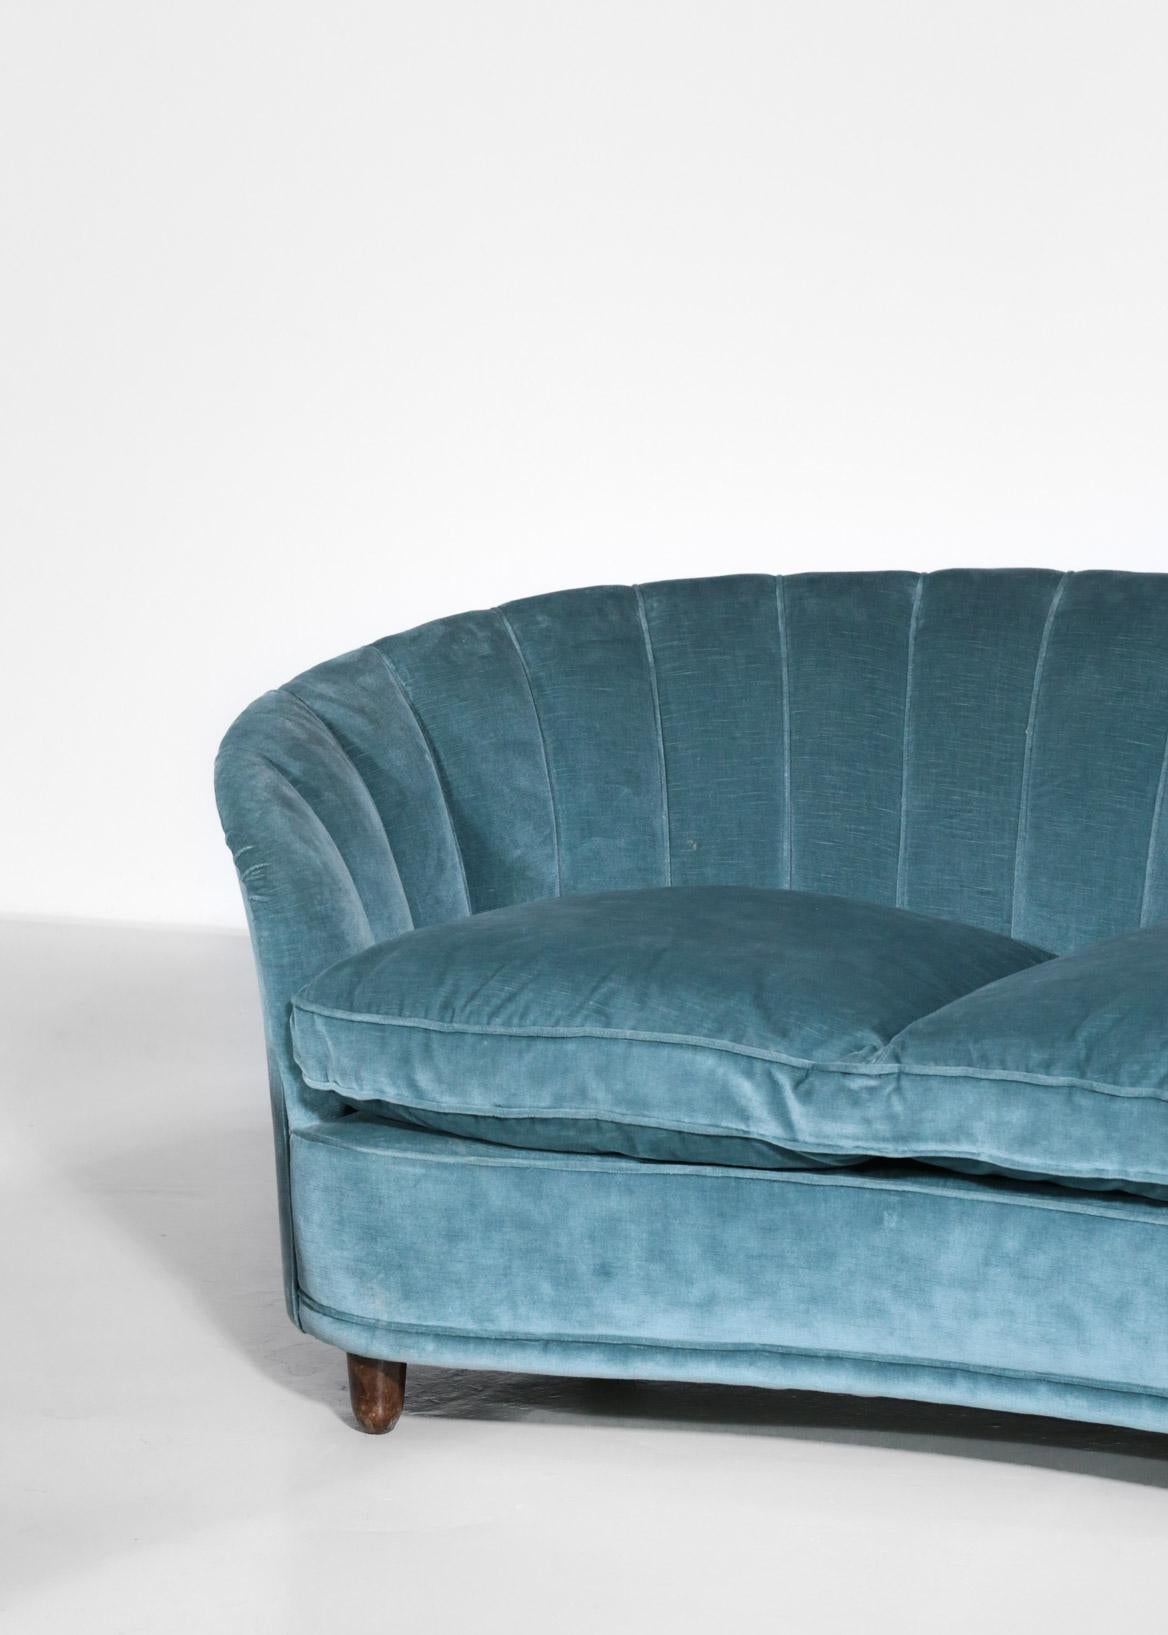 Italian Sofa by Gio Ponti Design 1960s Velvet Vintage Designer 2 Seat 5